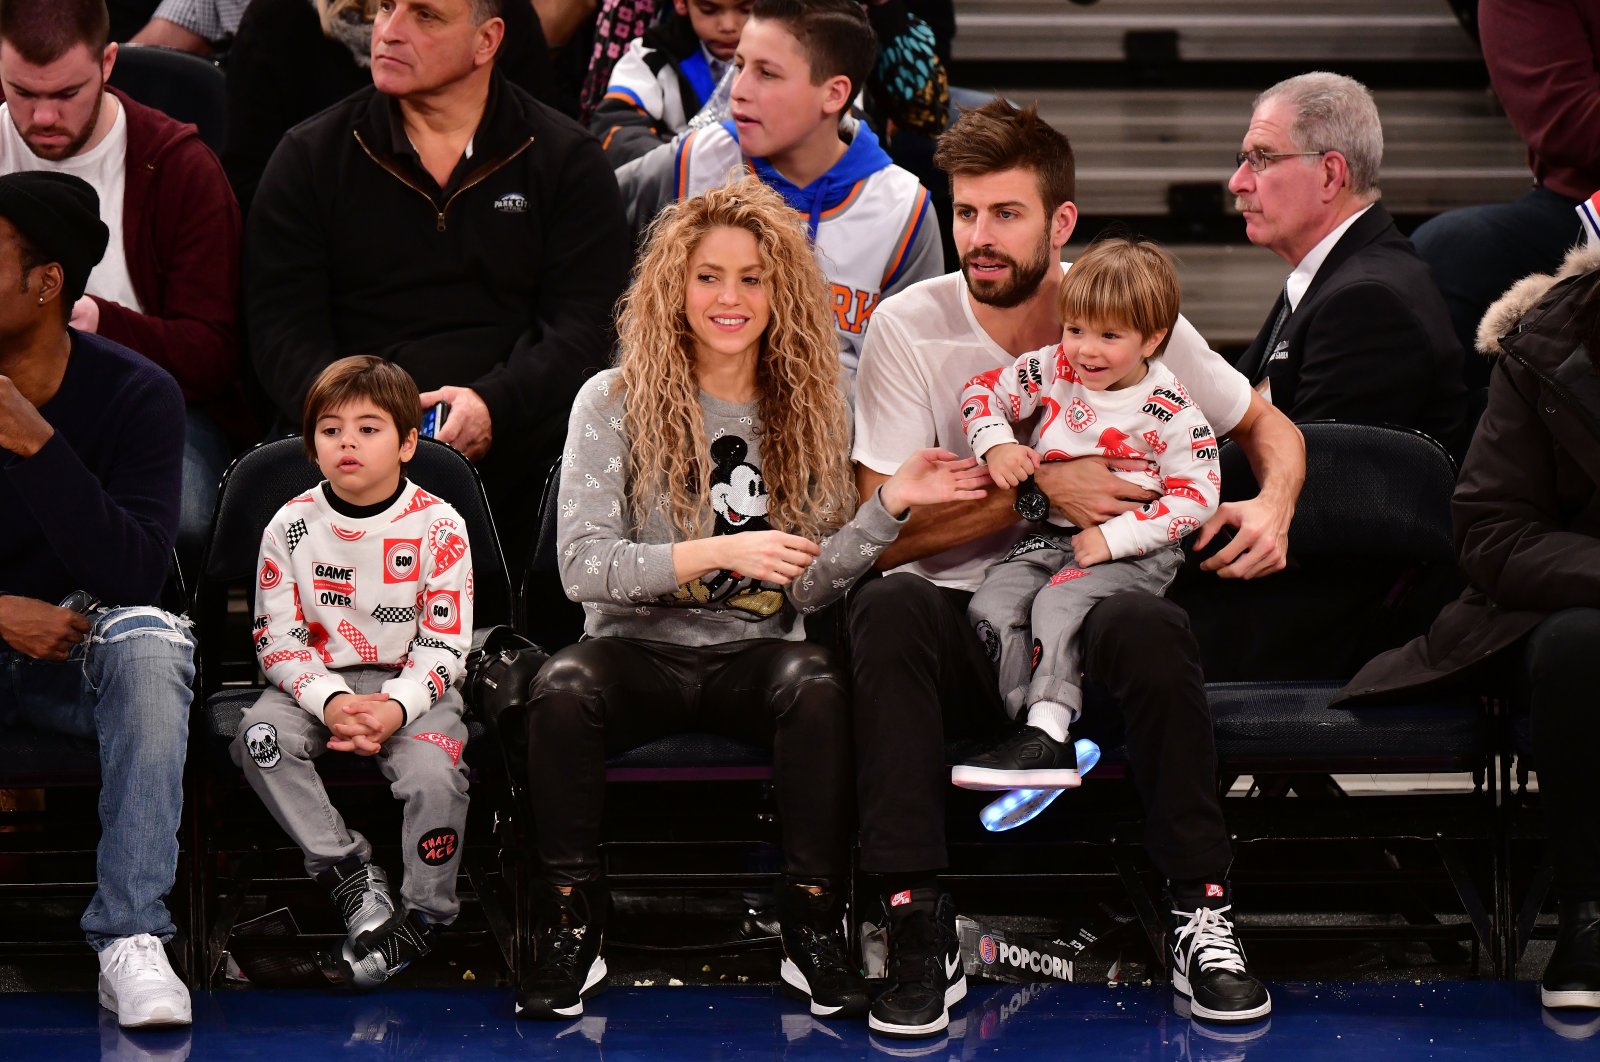 Milan Pique Mebarak (L), Shakira (2nd L), Sasha Pique Mebarak and Gerard Pique (R) attend the New York Knicks versus Philadelphia 76ers game at Madison Square Garden, New York, U.S., Dec. 25, 2017.  (Getty Images Photo)